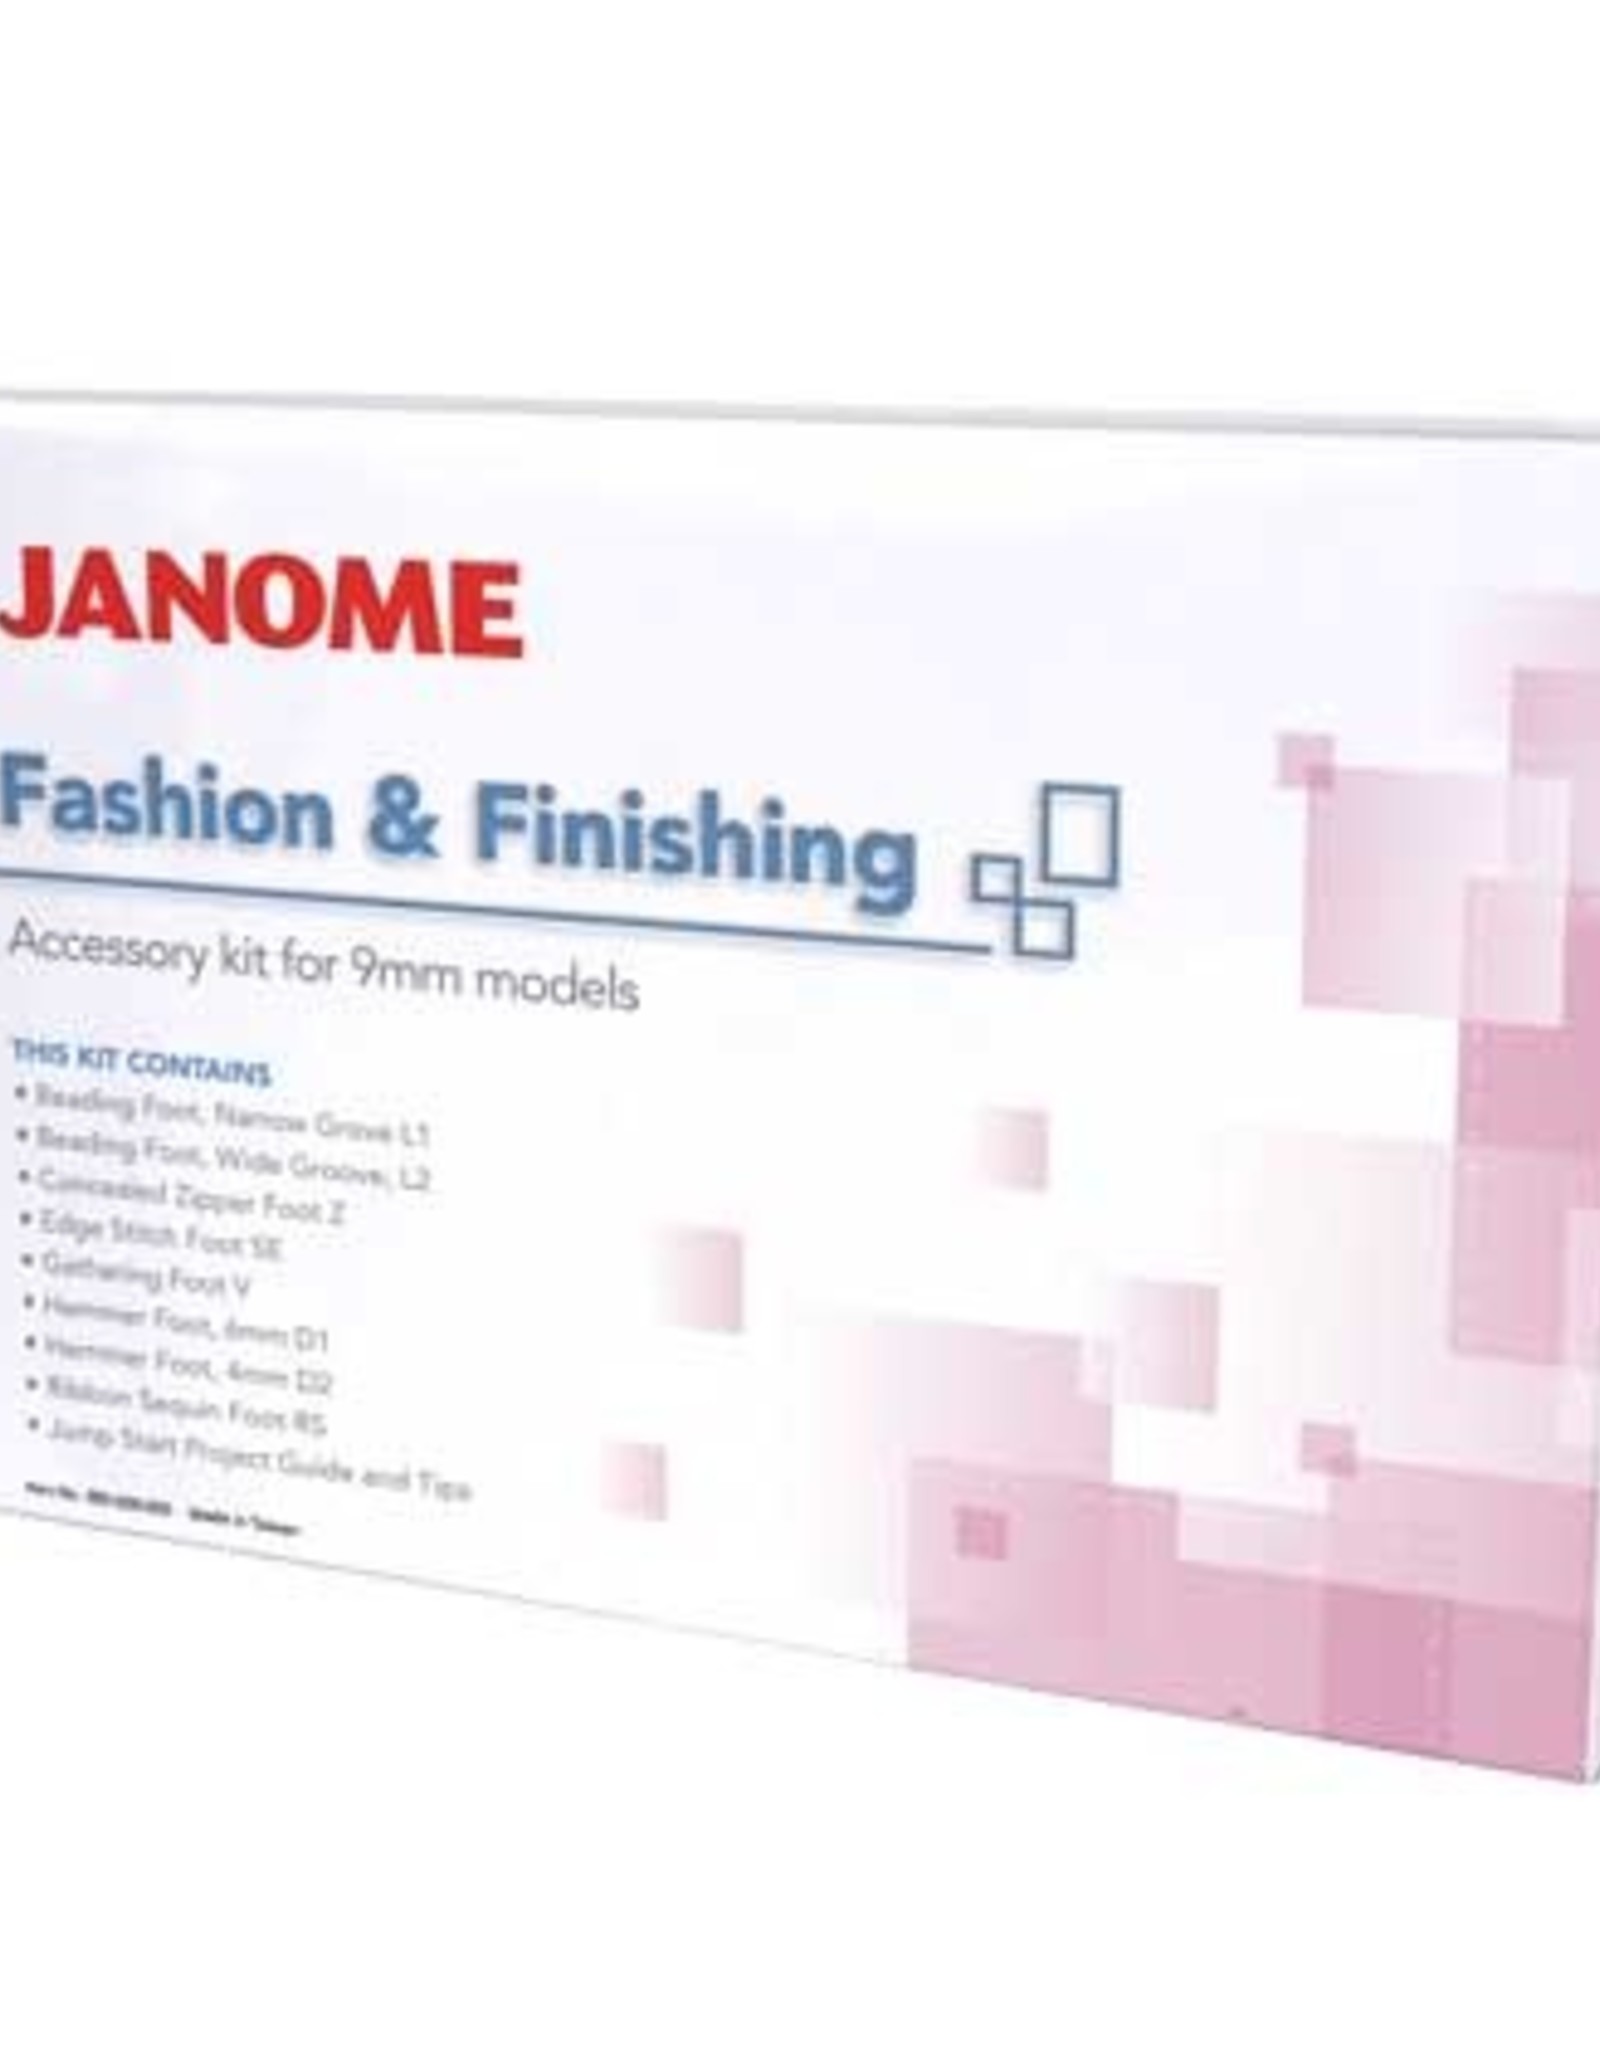 Janome Fashion and finishing Accessory kit (9mm model)